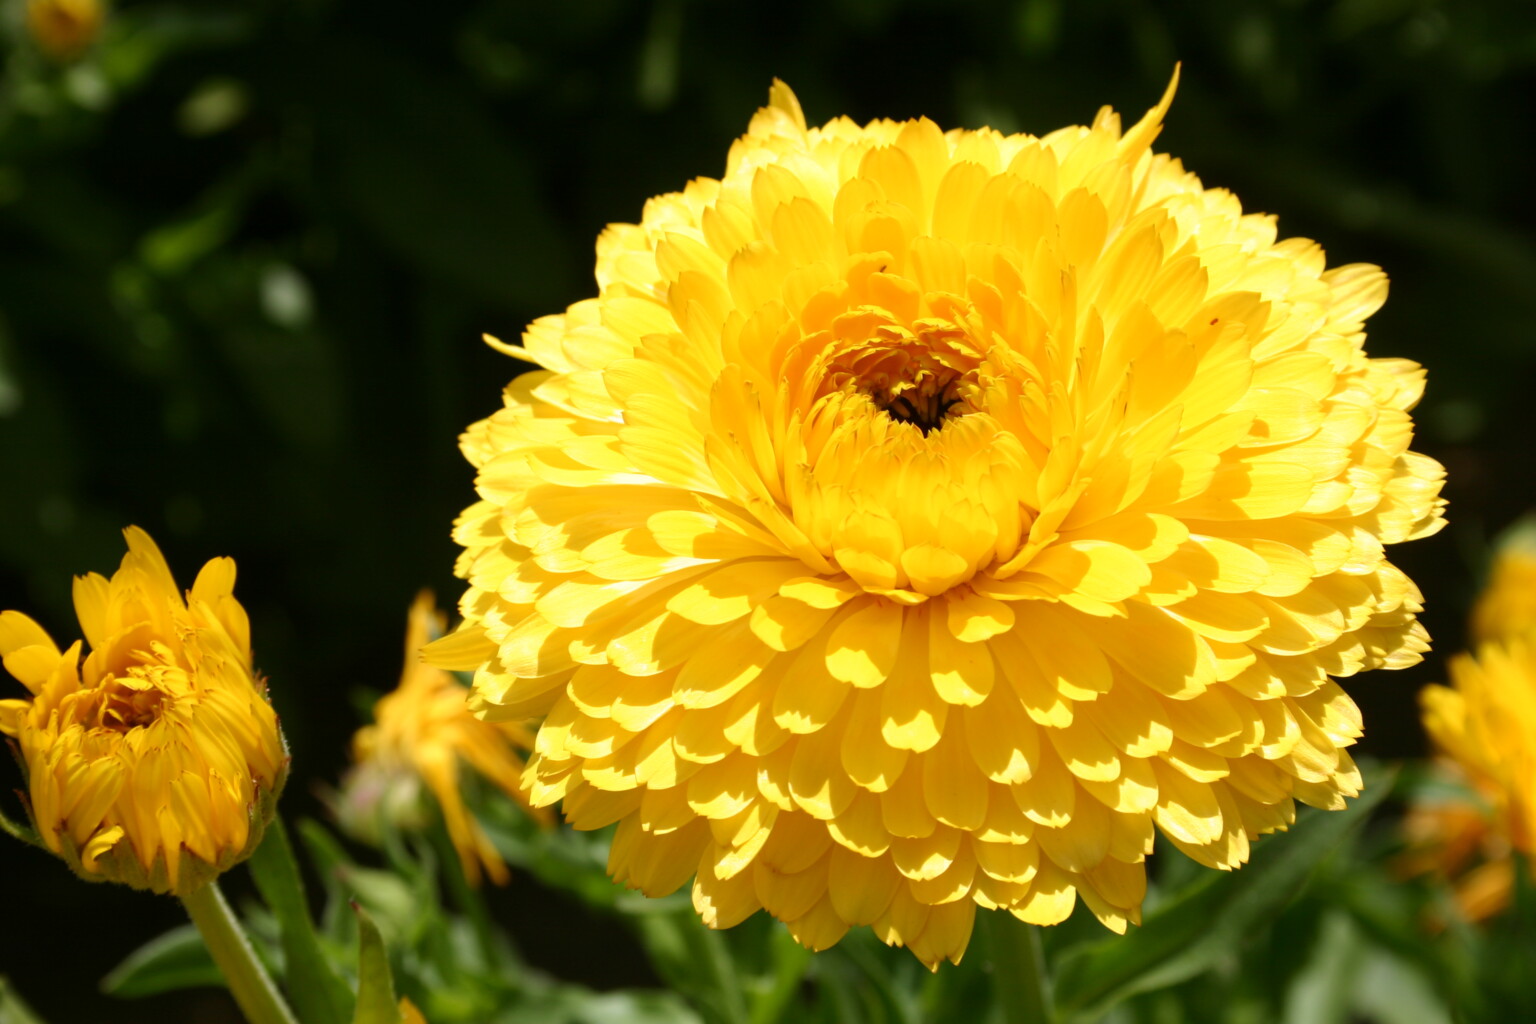 Calendula (Marigold) Flowers, Whole - 1 Lb